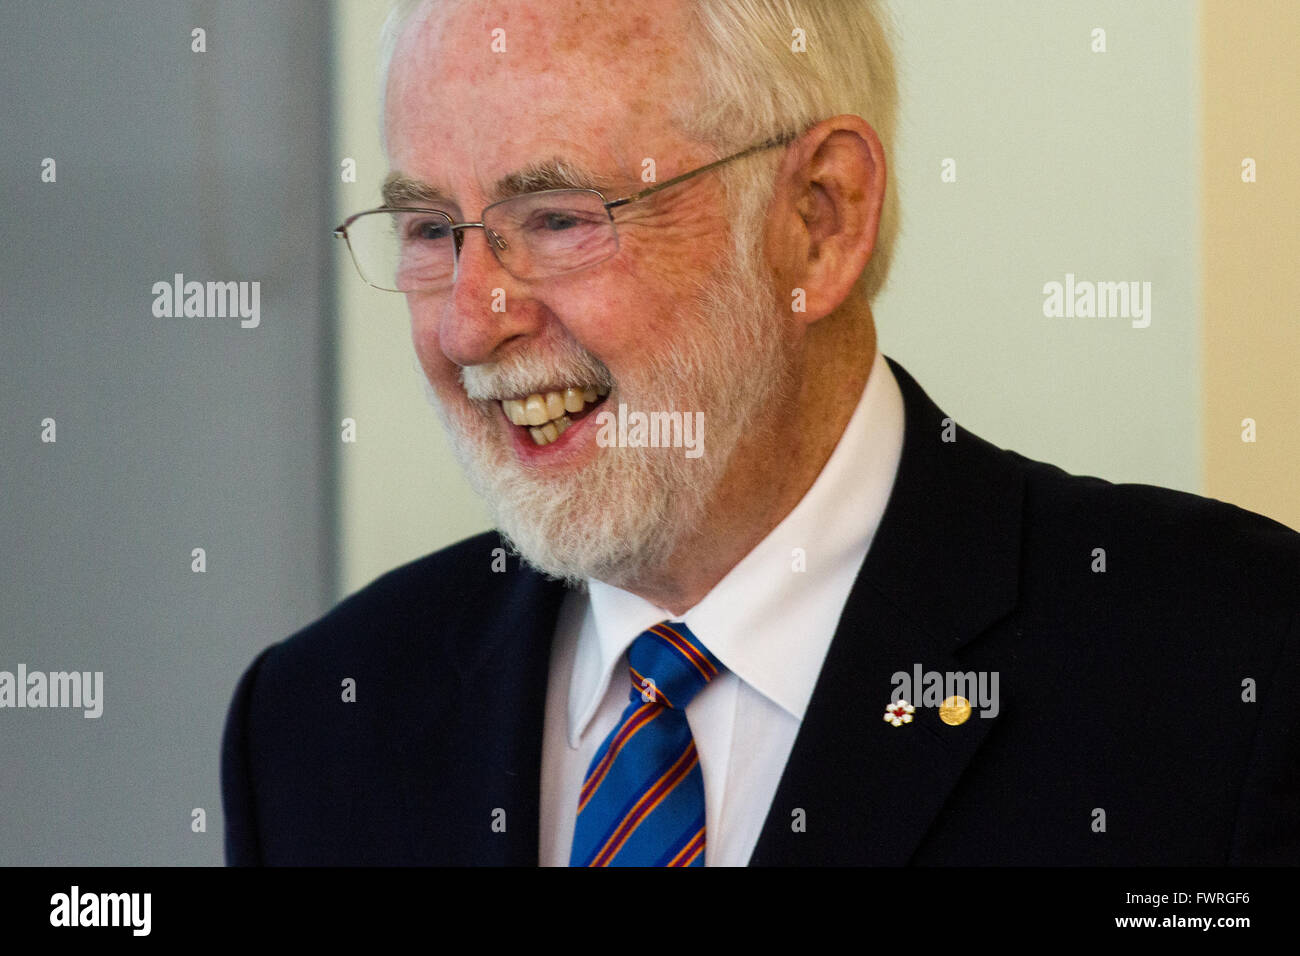 Nobel prize co-winner in physics Arthur McDonald speaks at Queen's University in Kingston, Ont., on March 11, 2016. Stock Photo